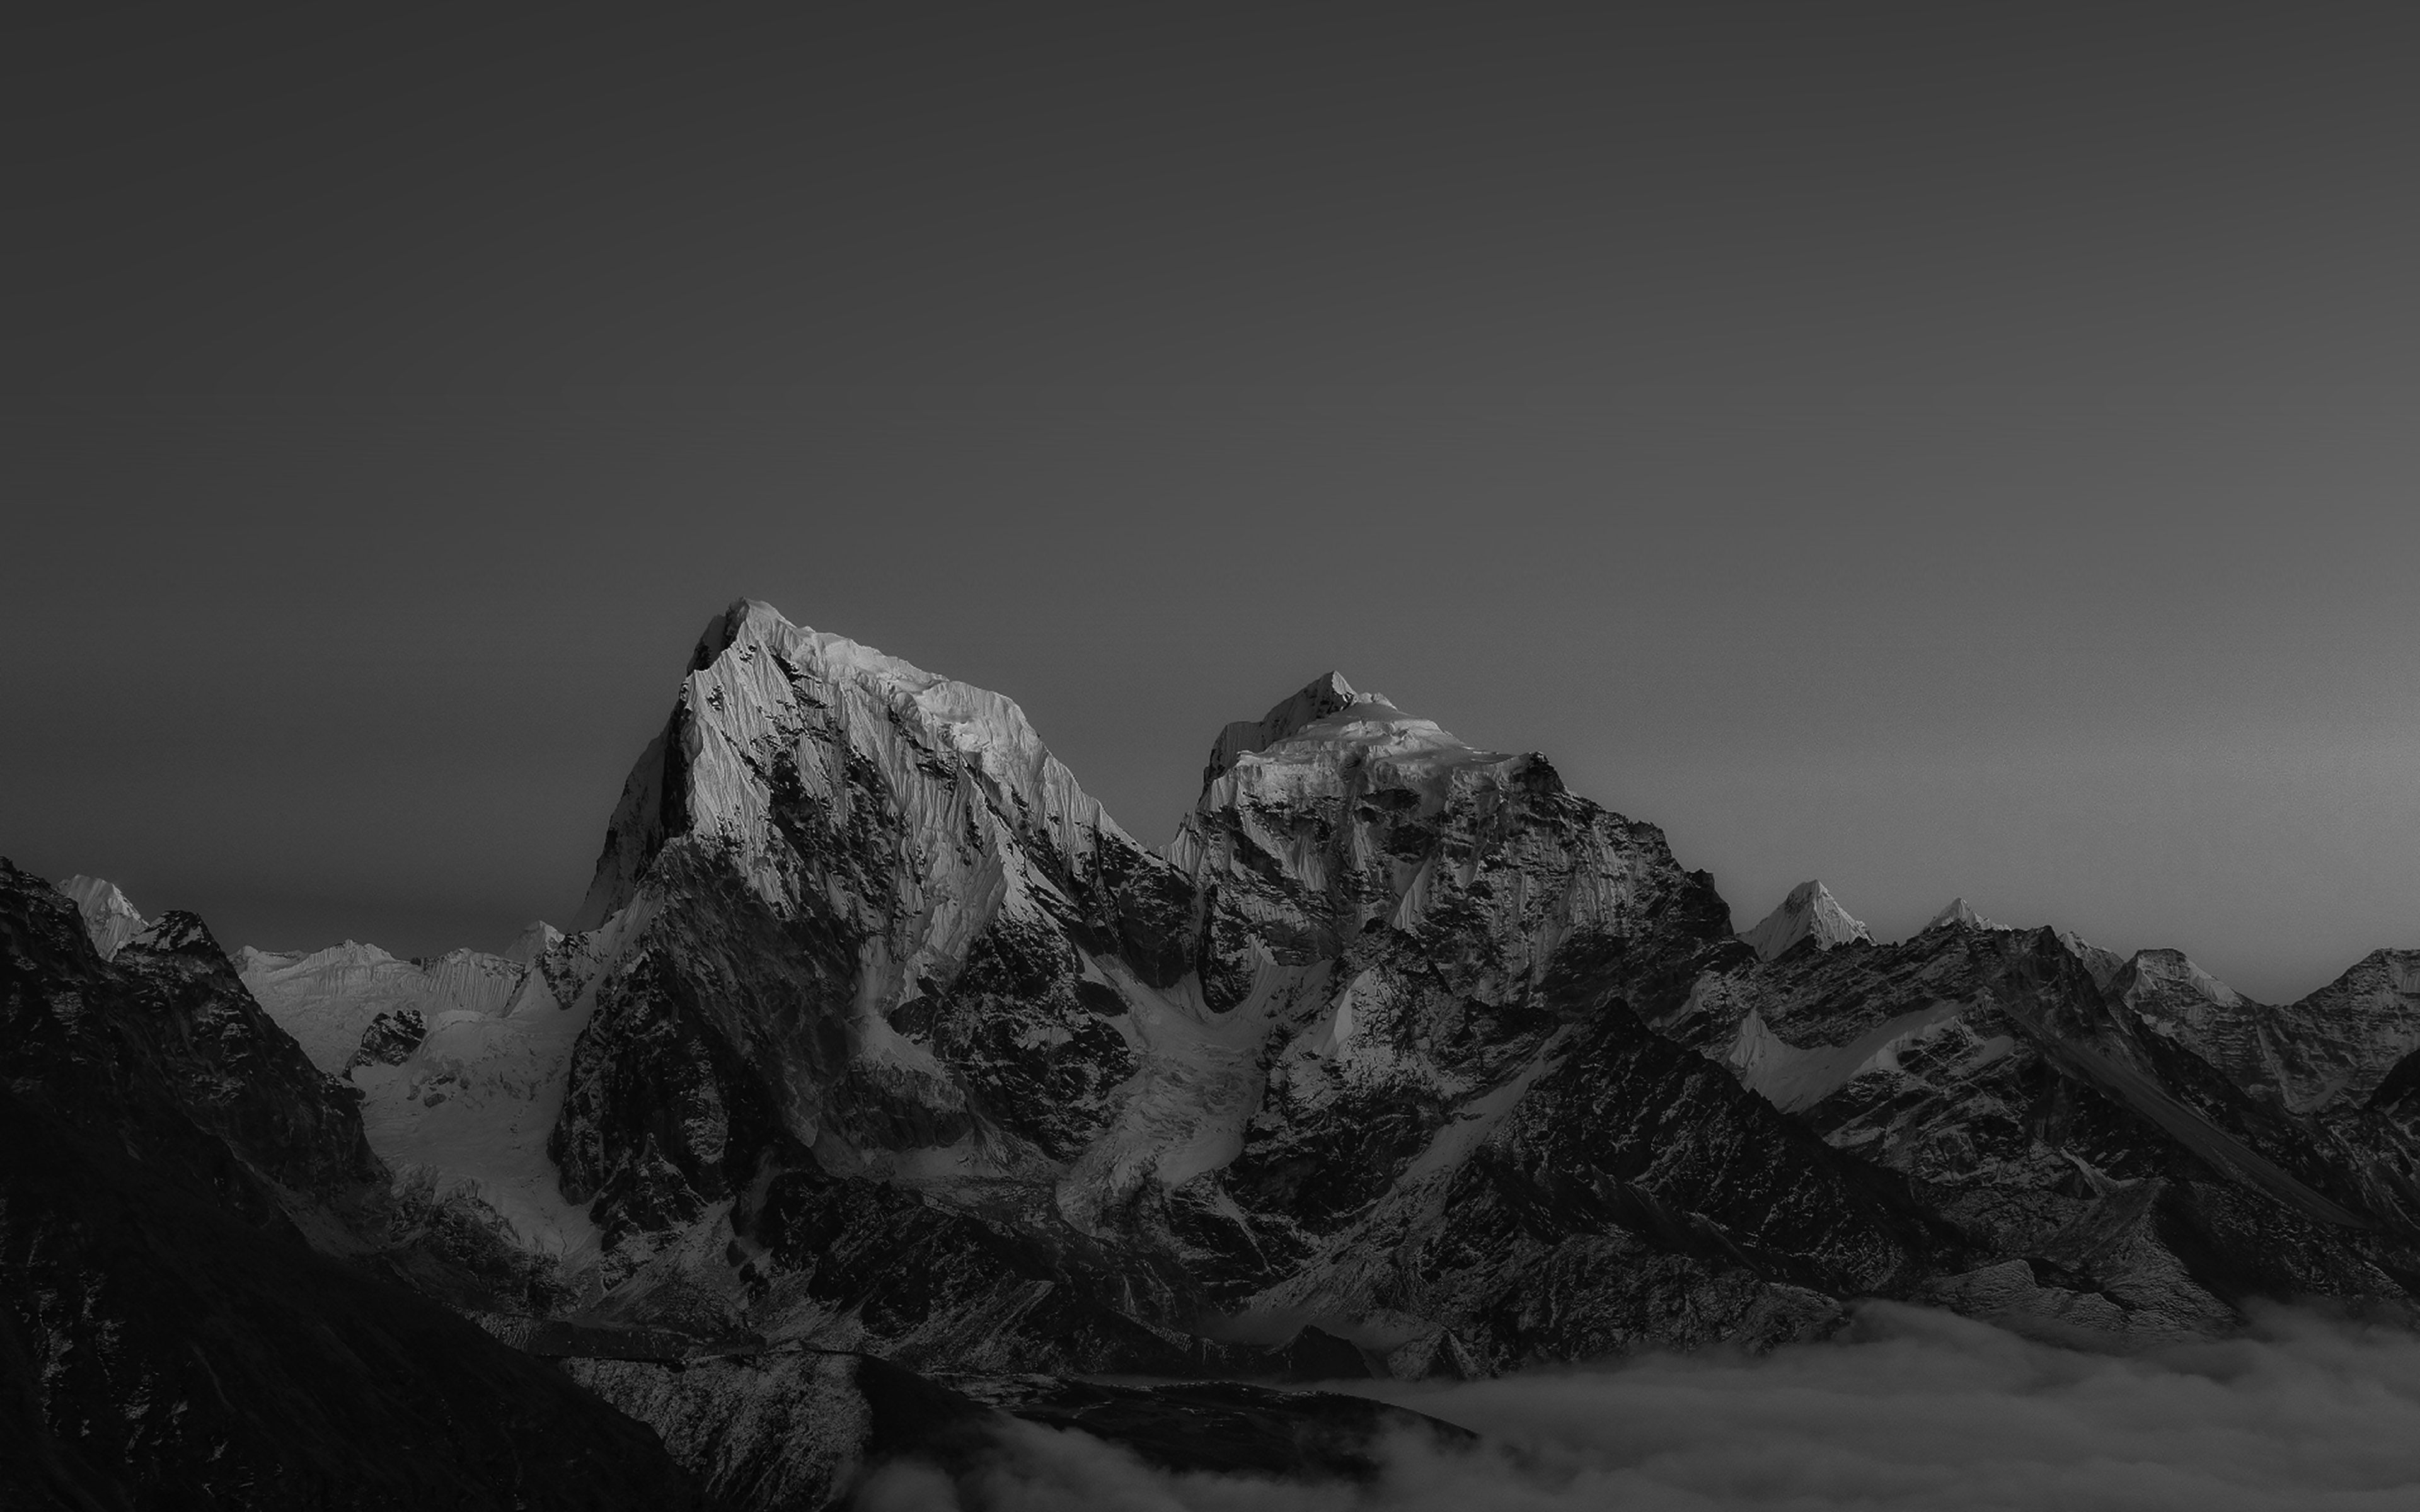 Wallpaper mountain, dark, nature desktop wallpaper, hd image, picture,  background, 7ea043